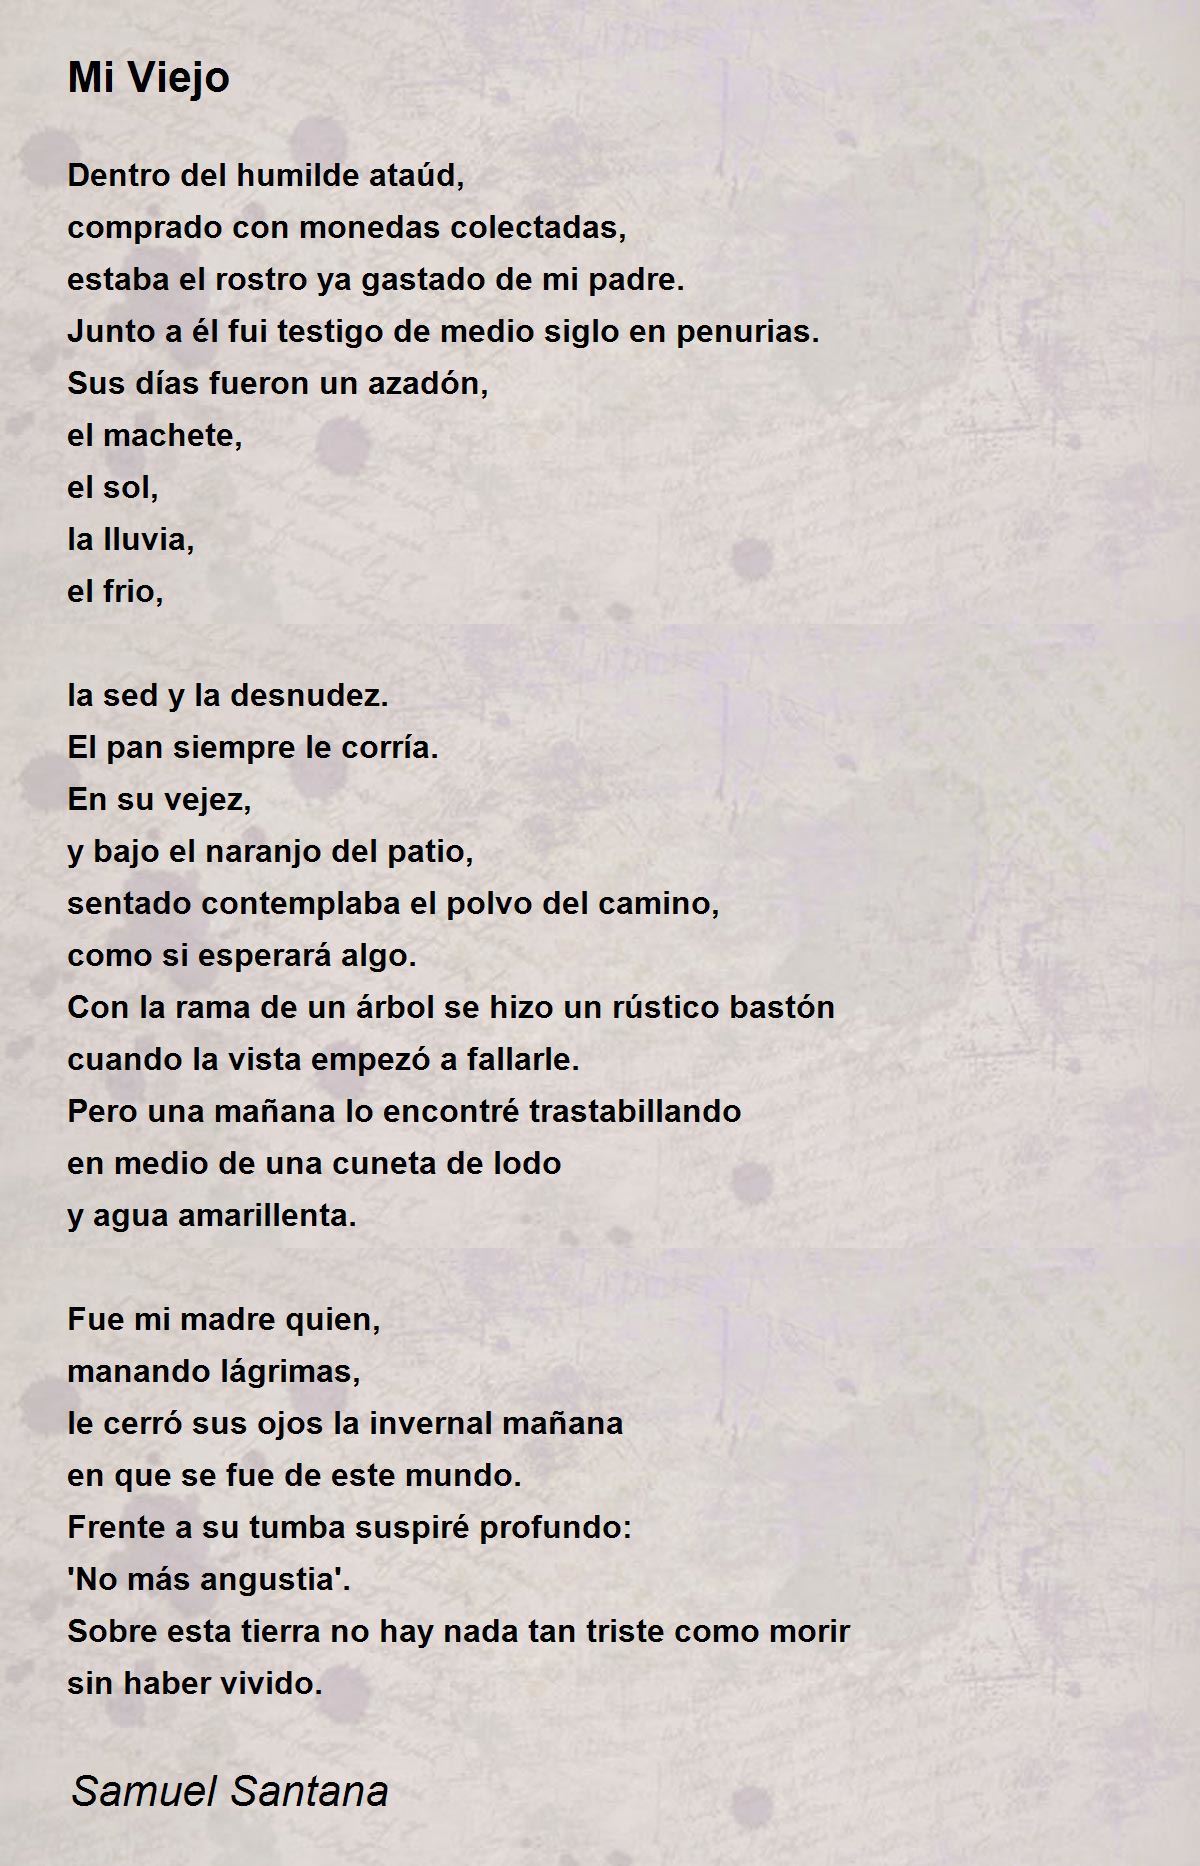 Mi Viejo - Mi Viejo Poem by Samuel Santana